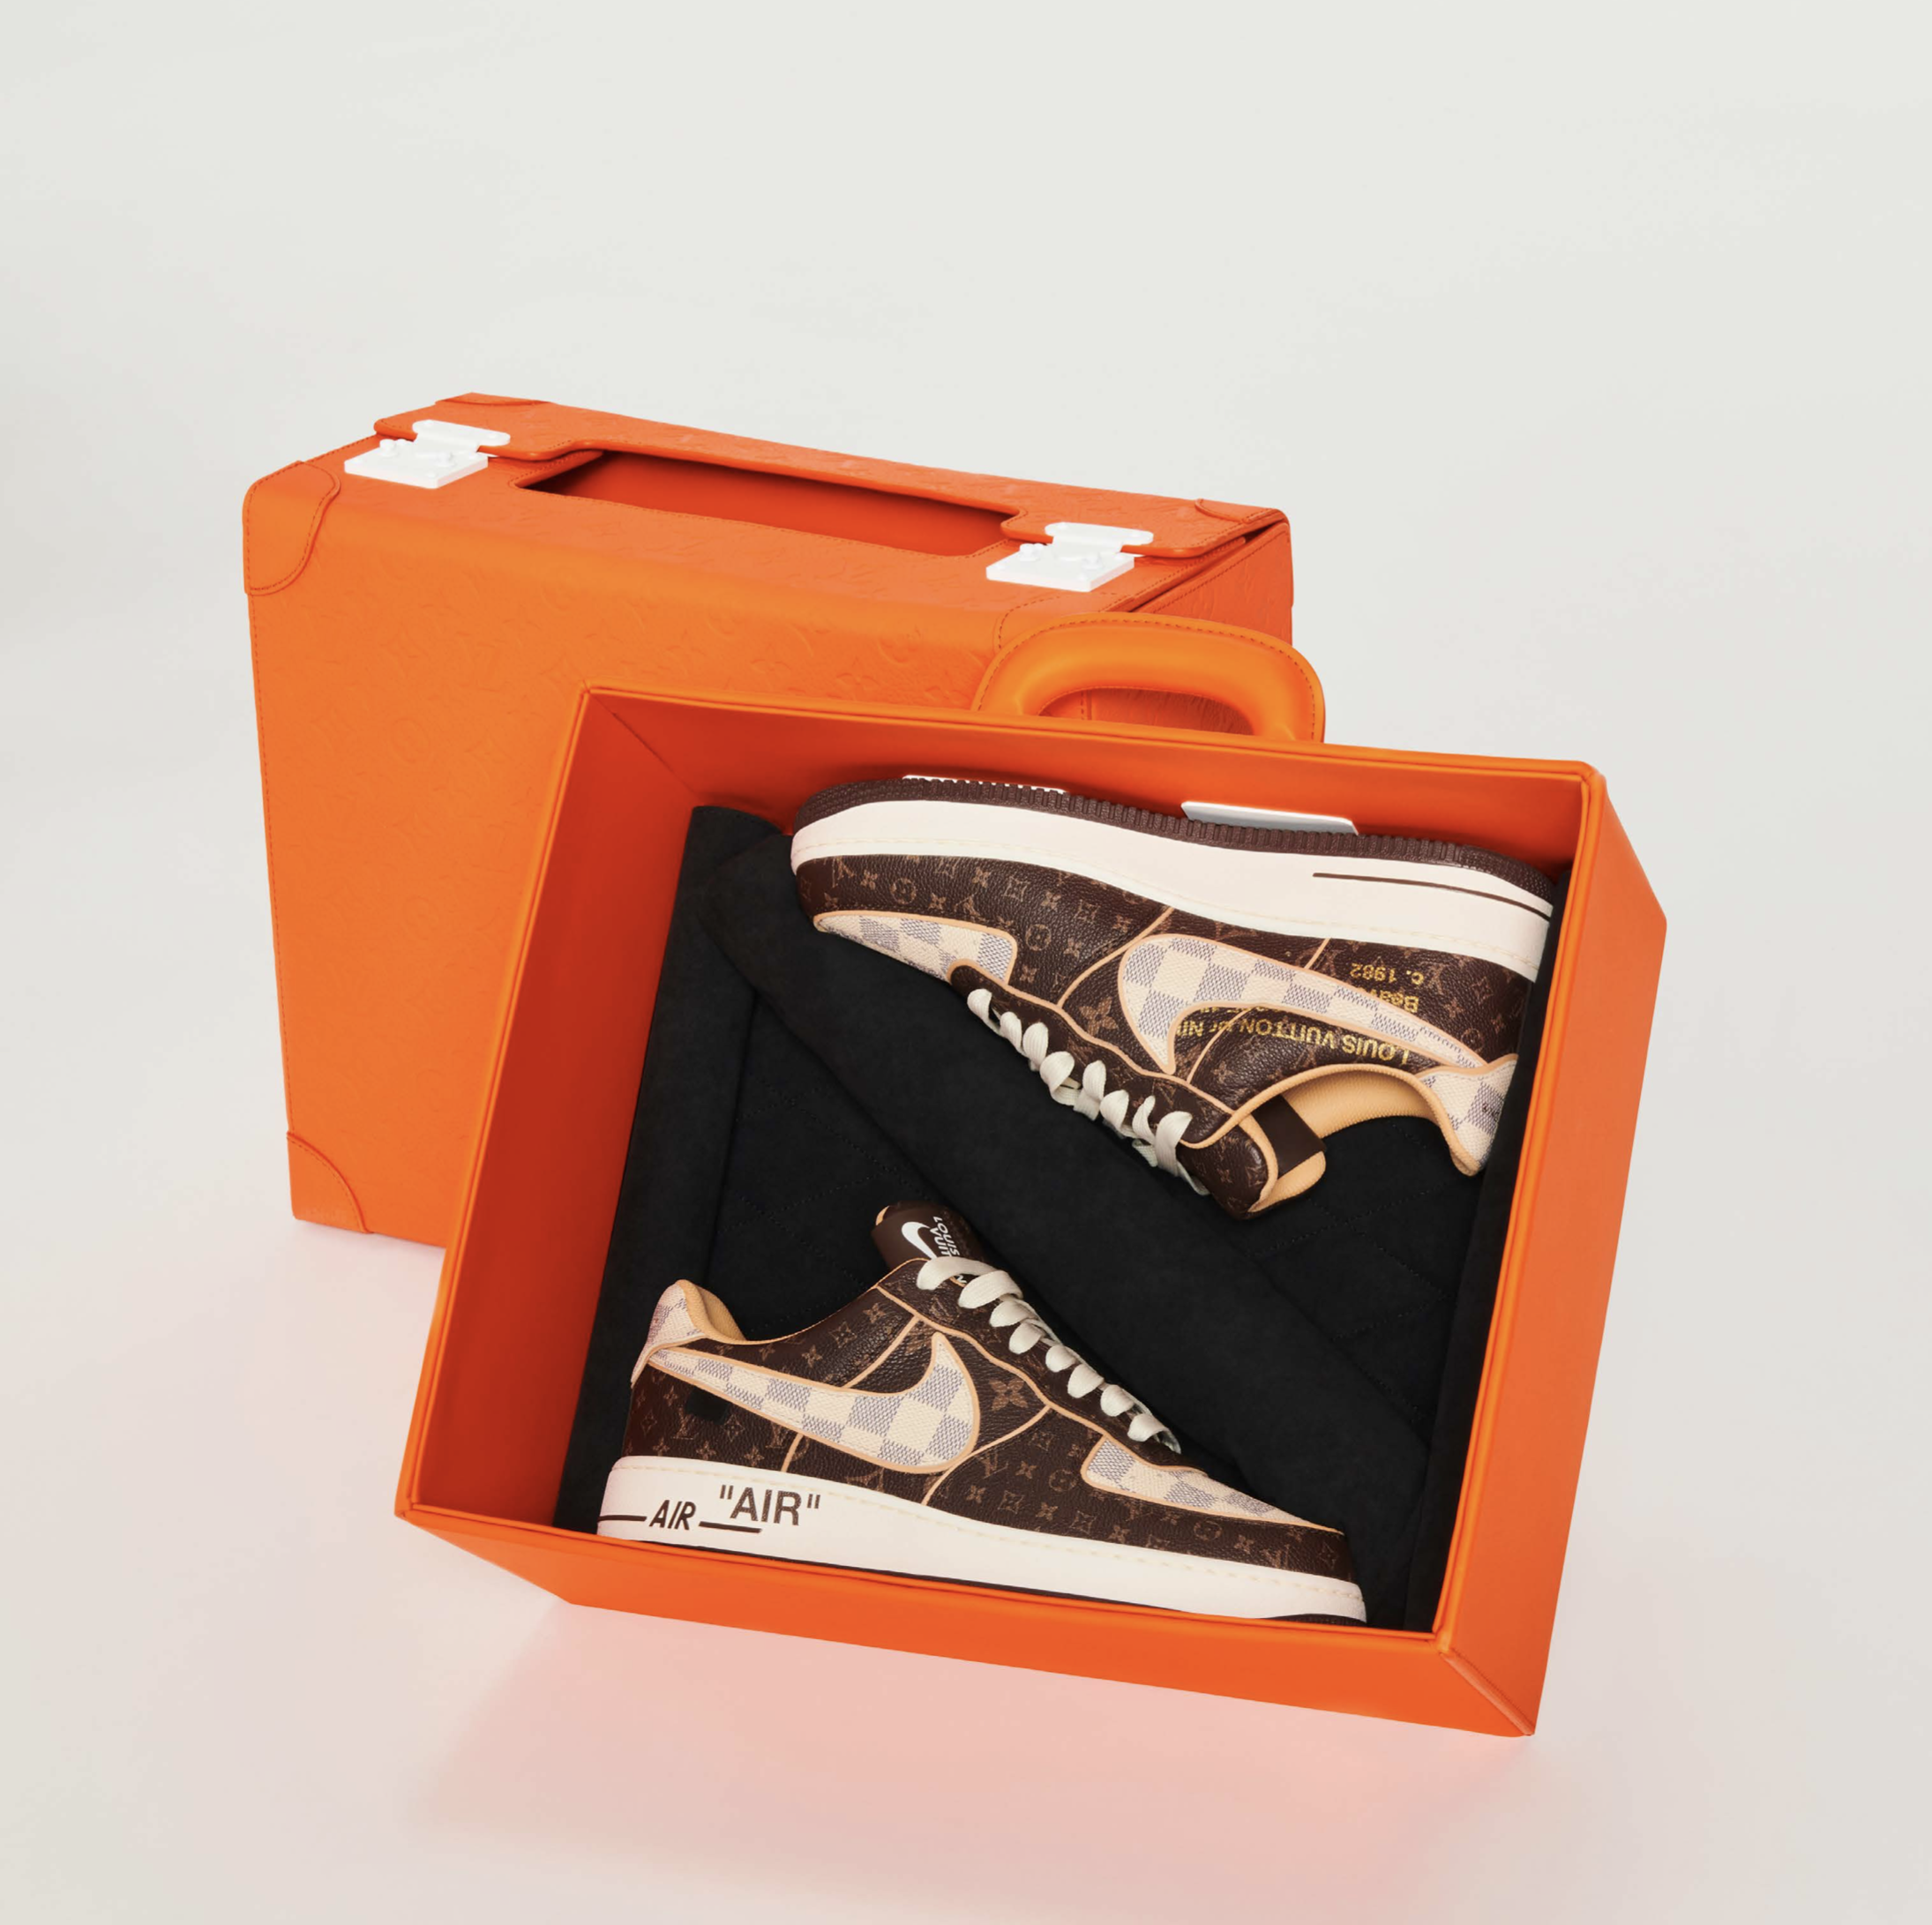 Reseller Accidentally Shares Bulk Louis Vuitton x Nike Air Force 1 Purchase  Receipt - Sneaker News